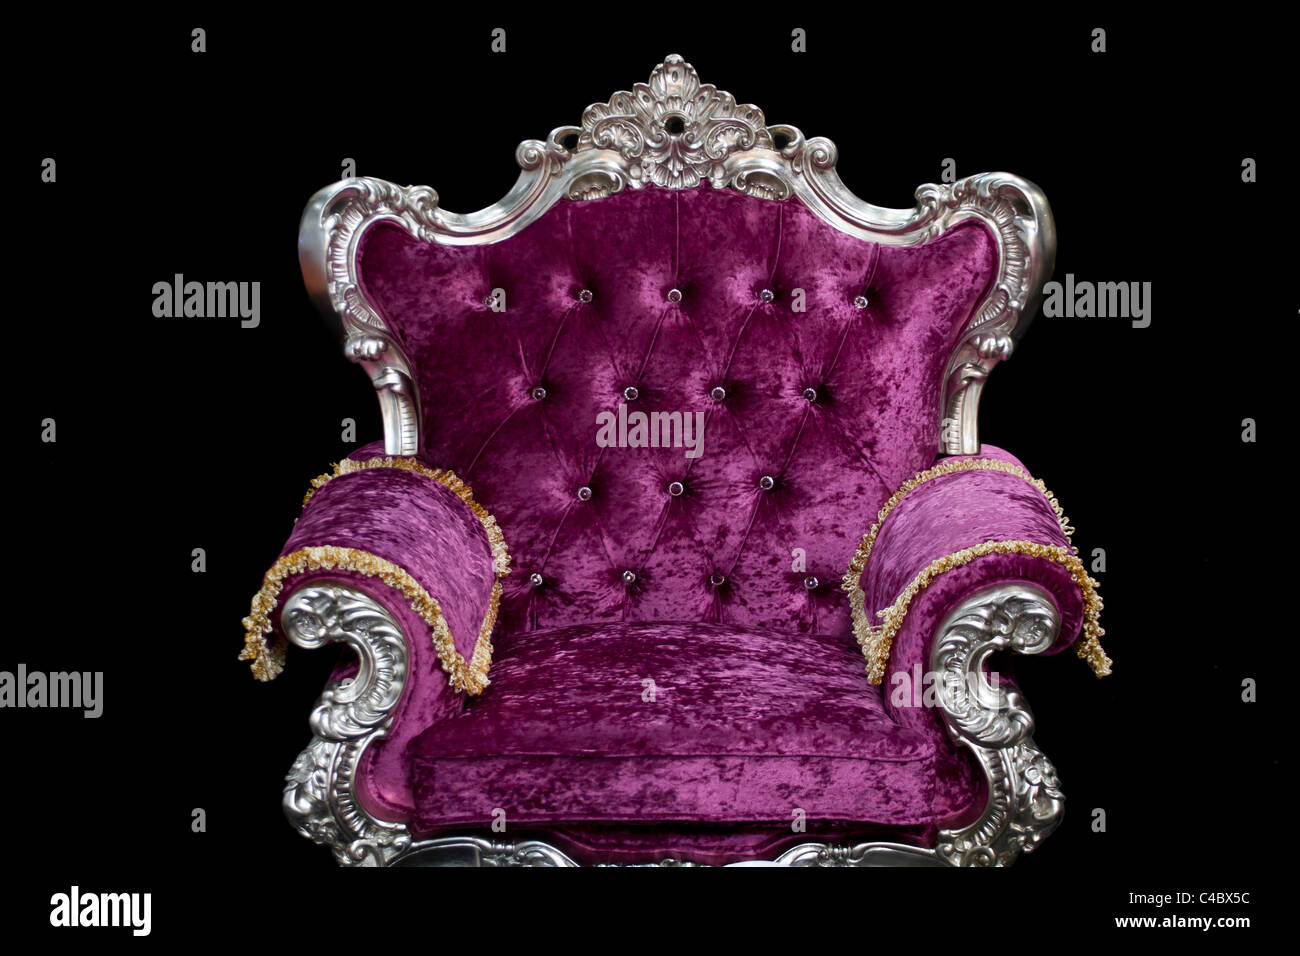 Luxury sofa In black background Stock Photo